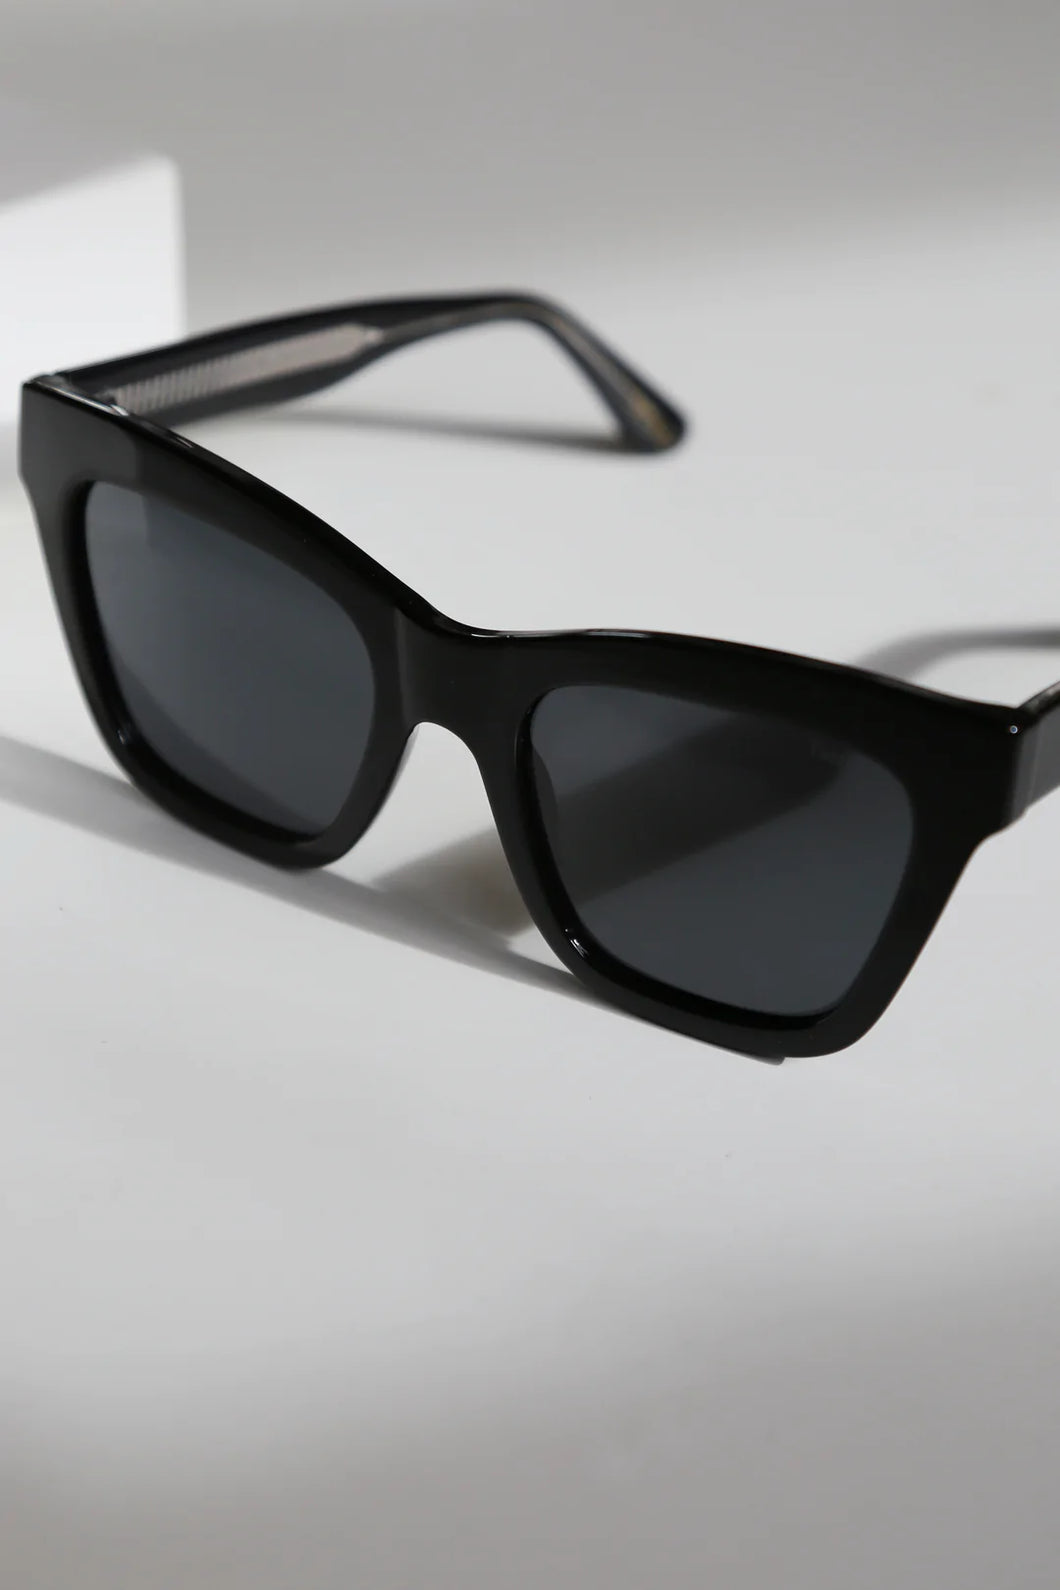 Muse sunglasses by Tutti & Co